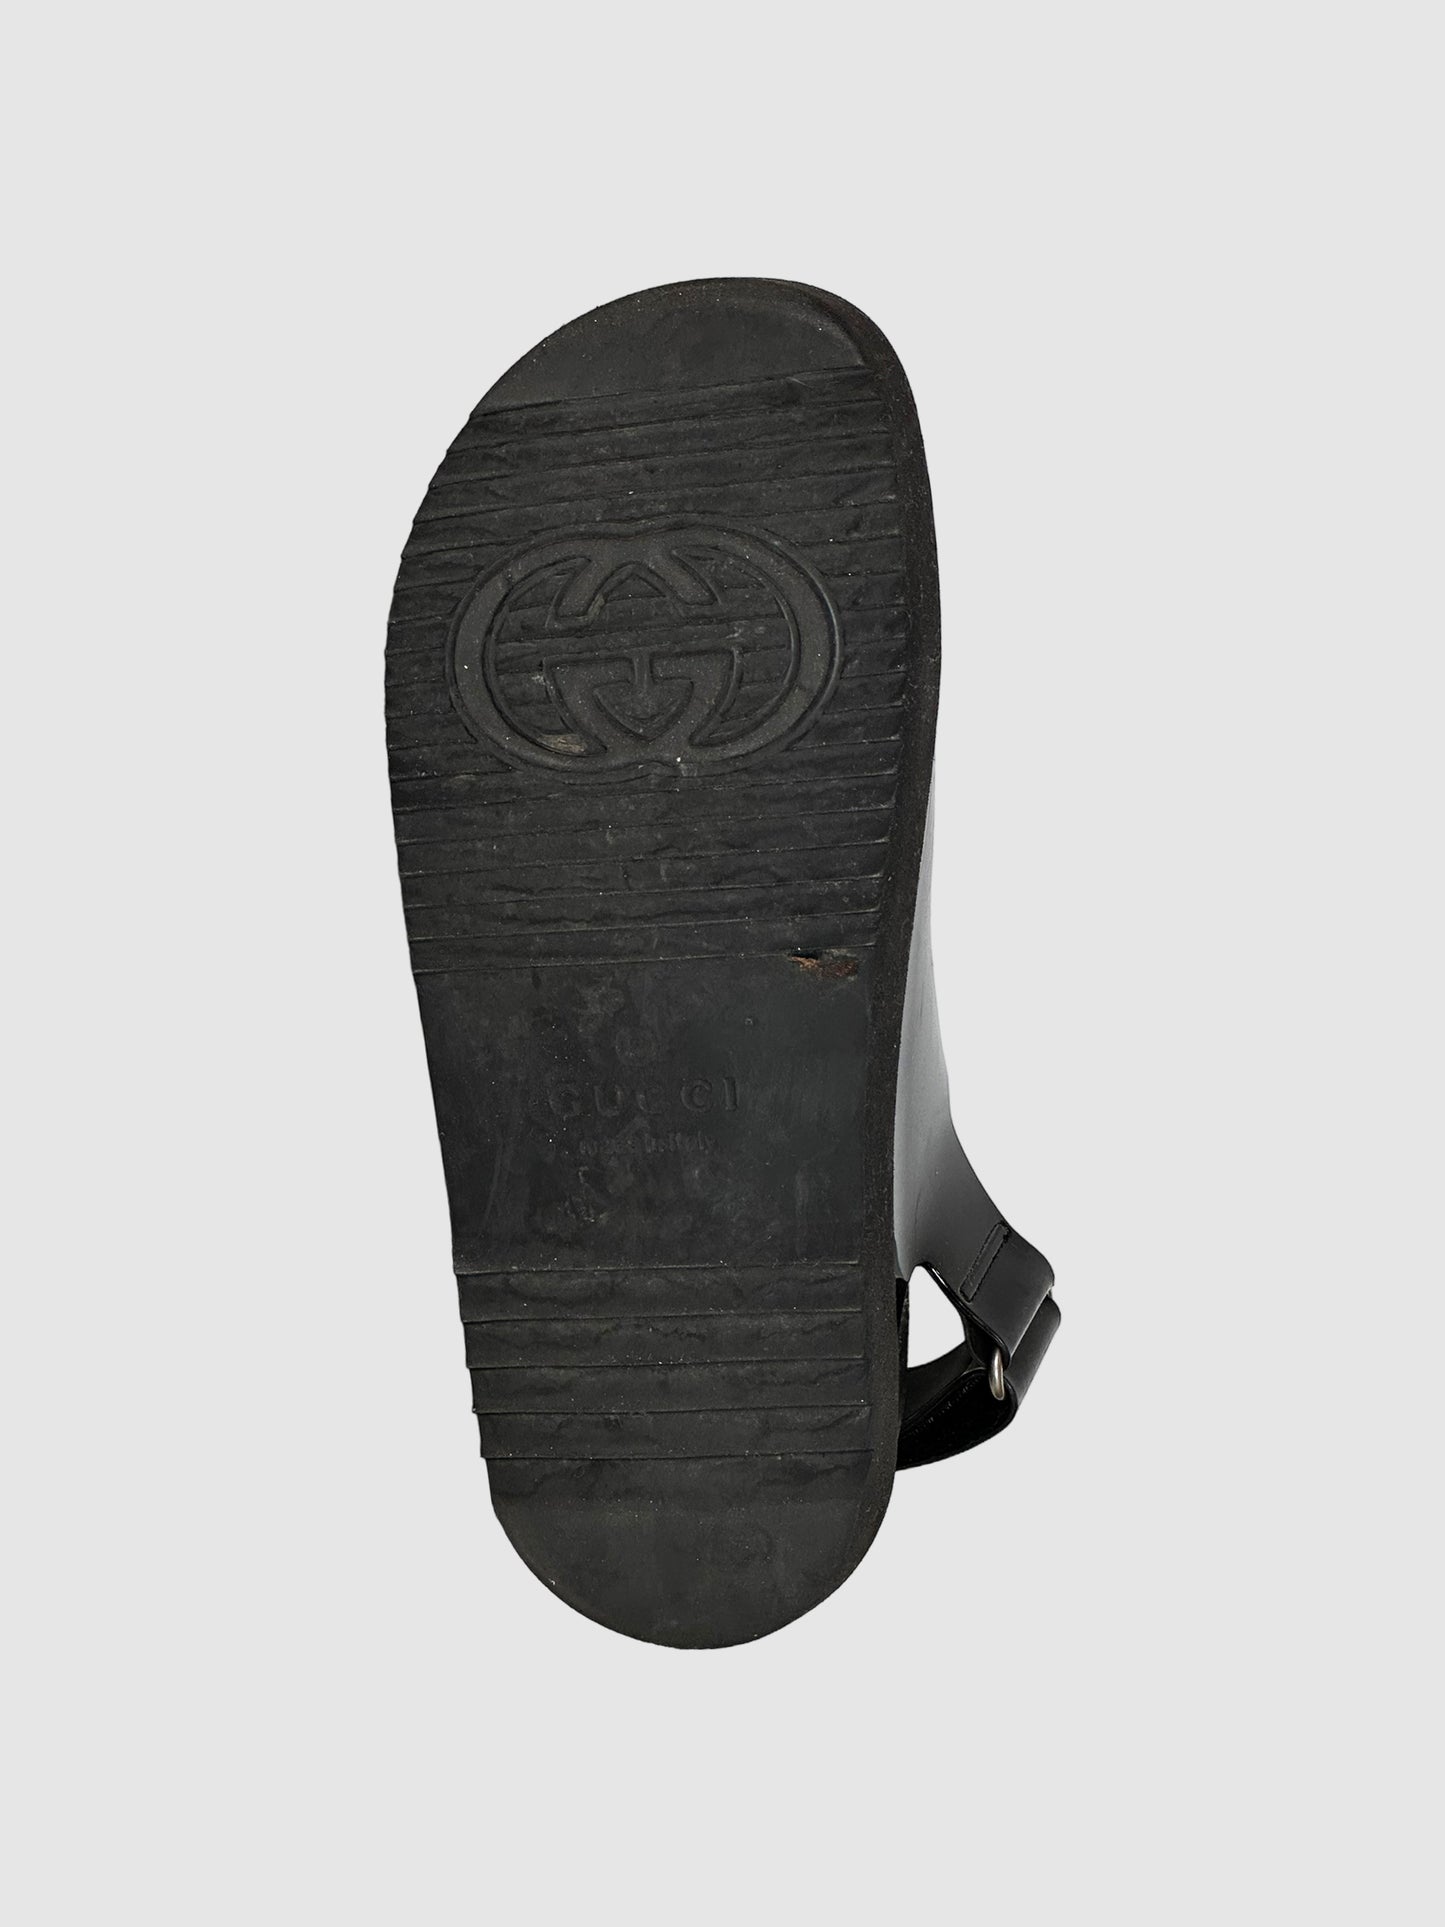 Gucci PVC Slingback Sandals - Size 38